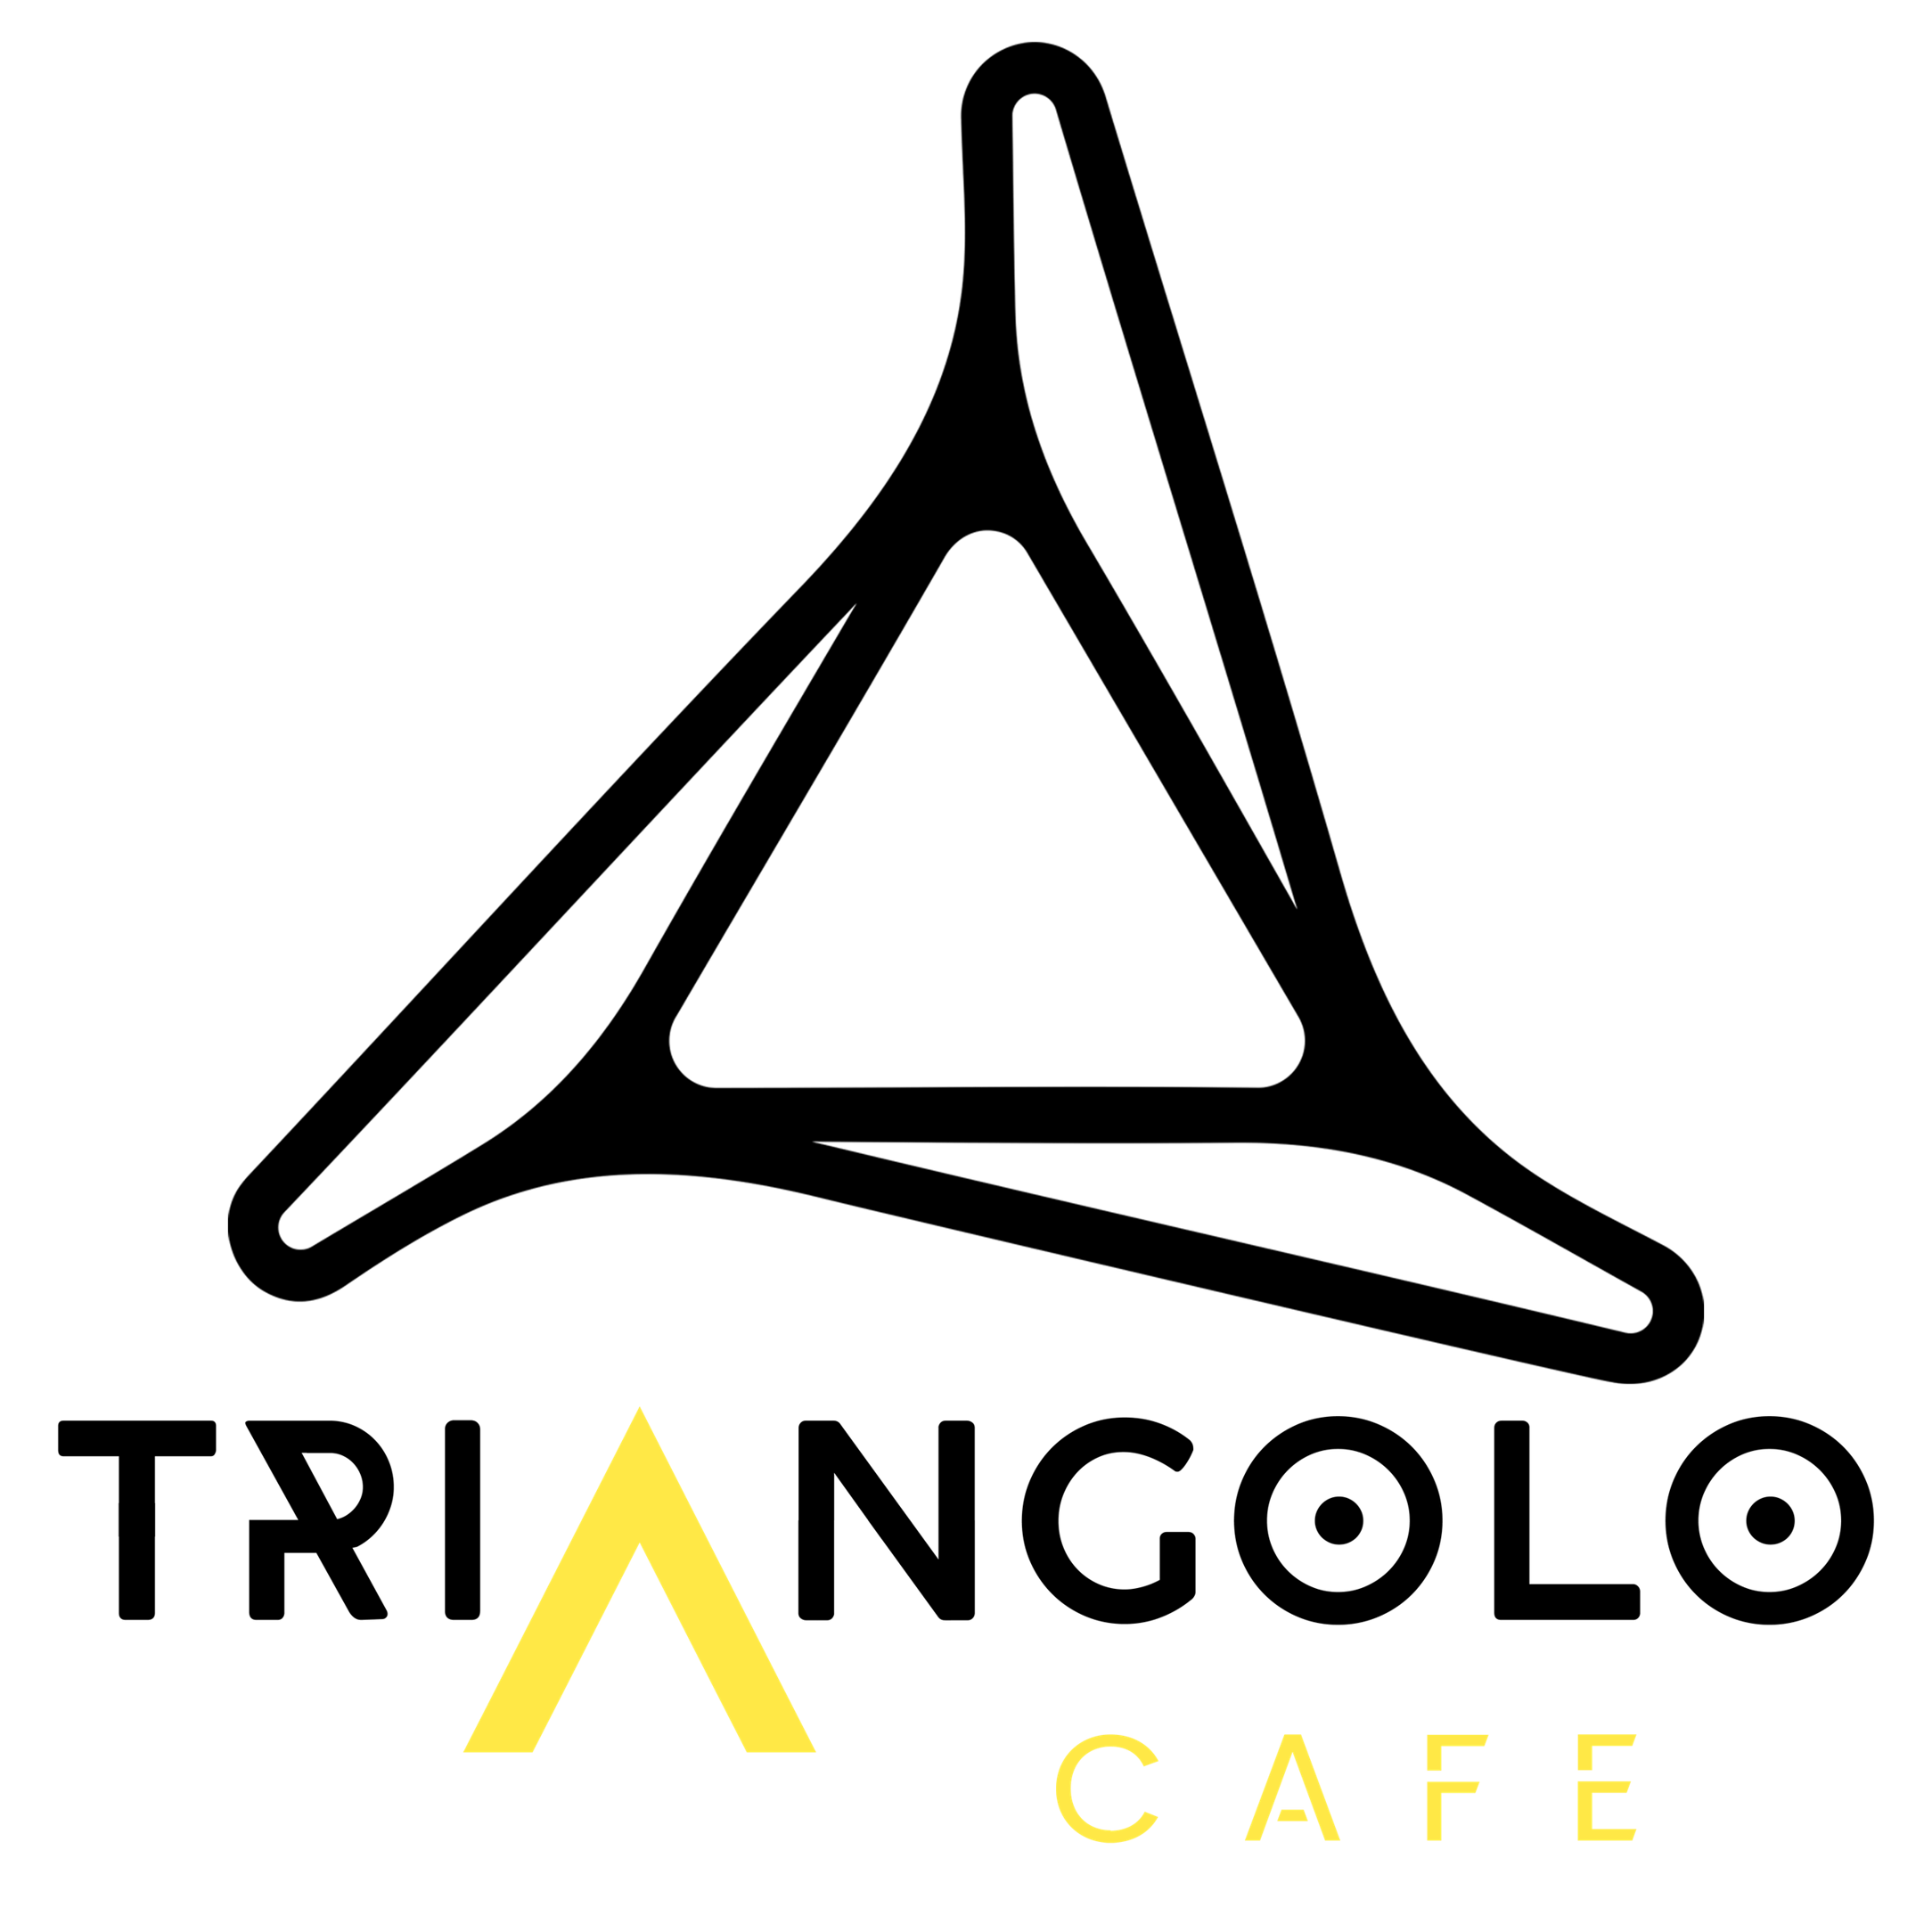 Triangolo Cafe